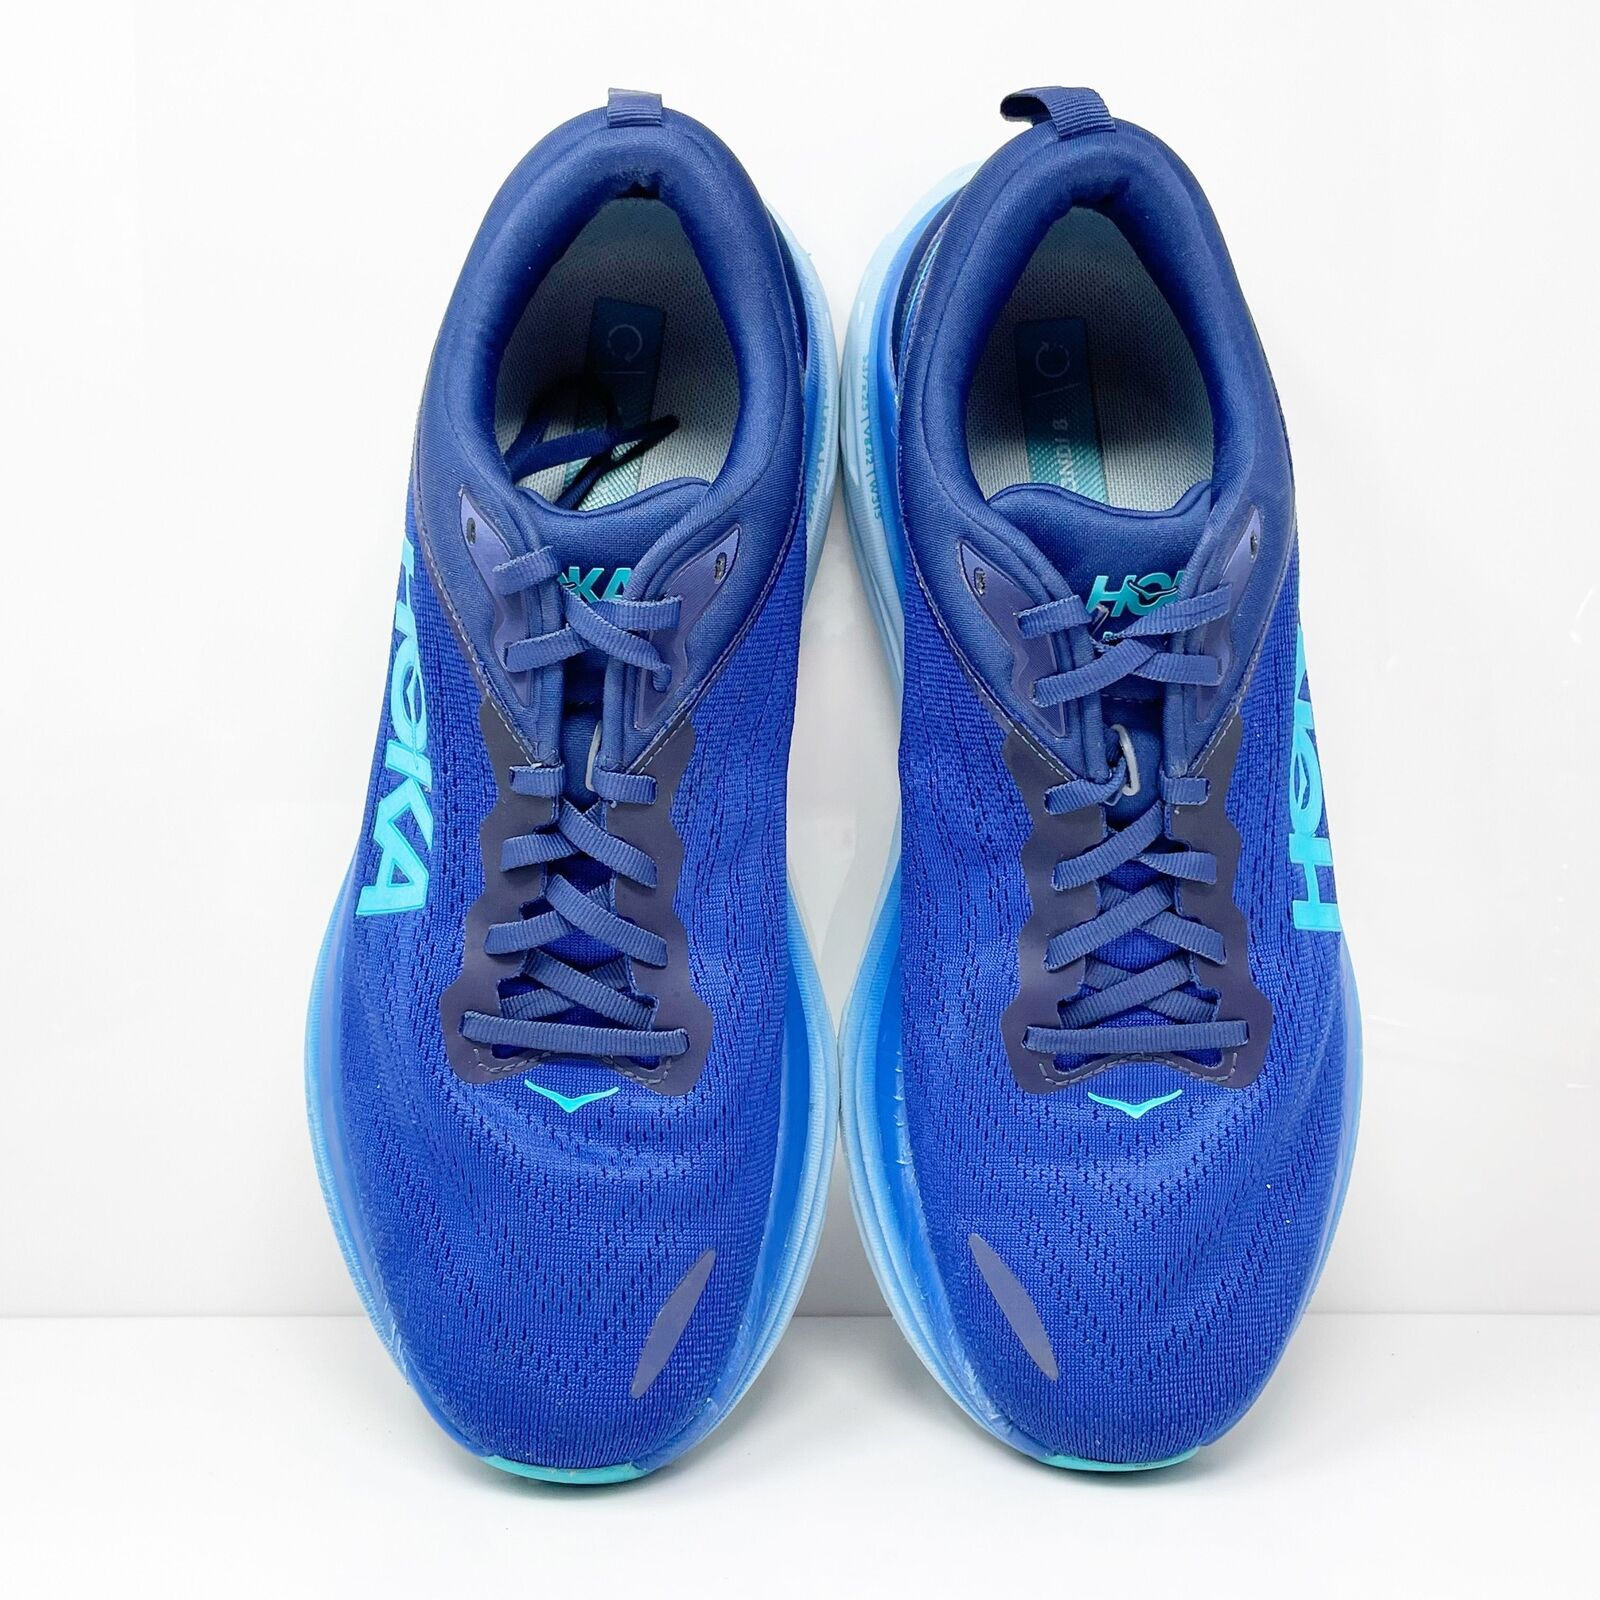 Hoka One One Mens Bondi 8 1123202 BBBG Blue Running Shoes Sneakers Siz ...